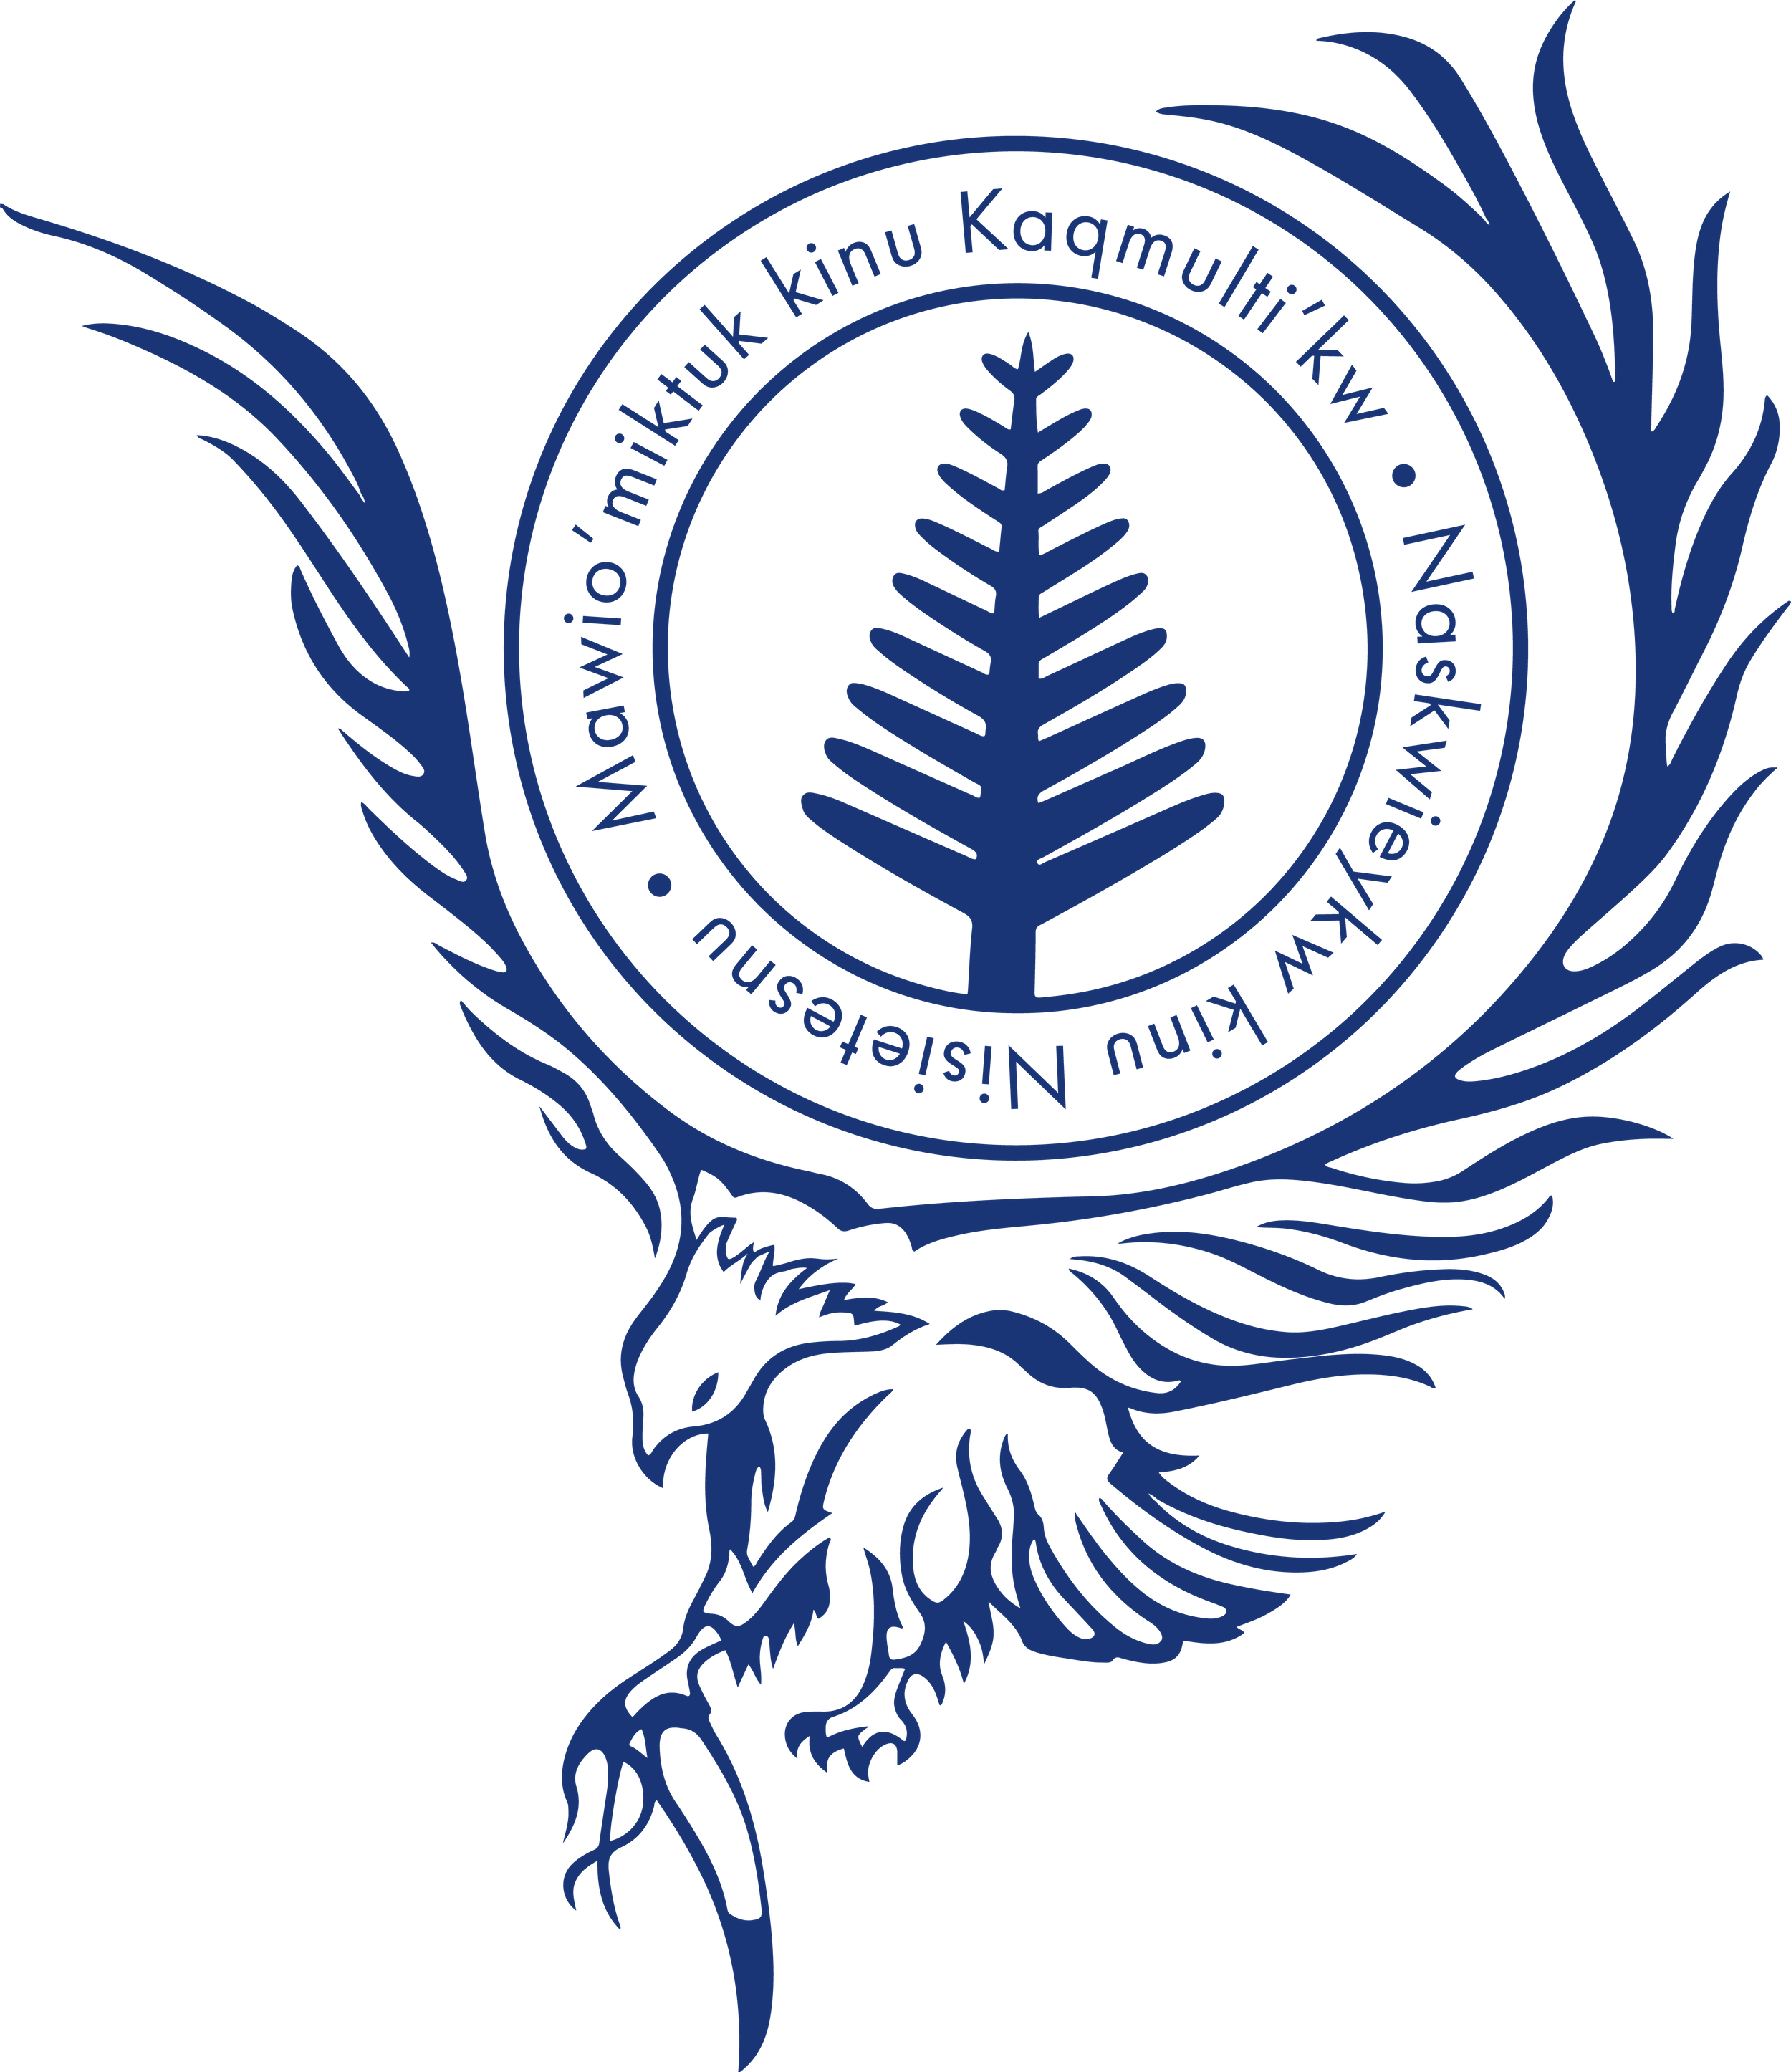 the logo of Union of Nova Scotia Mi'kmaq